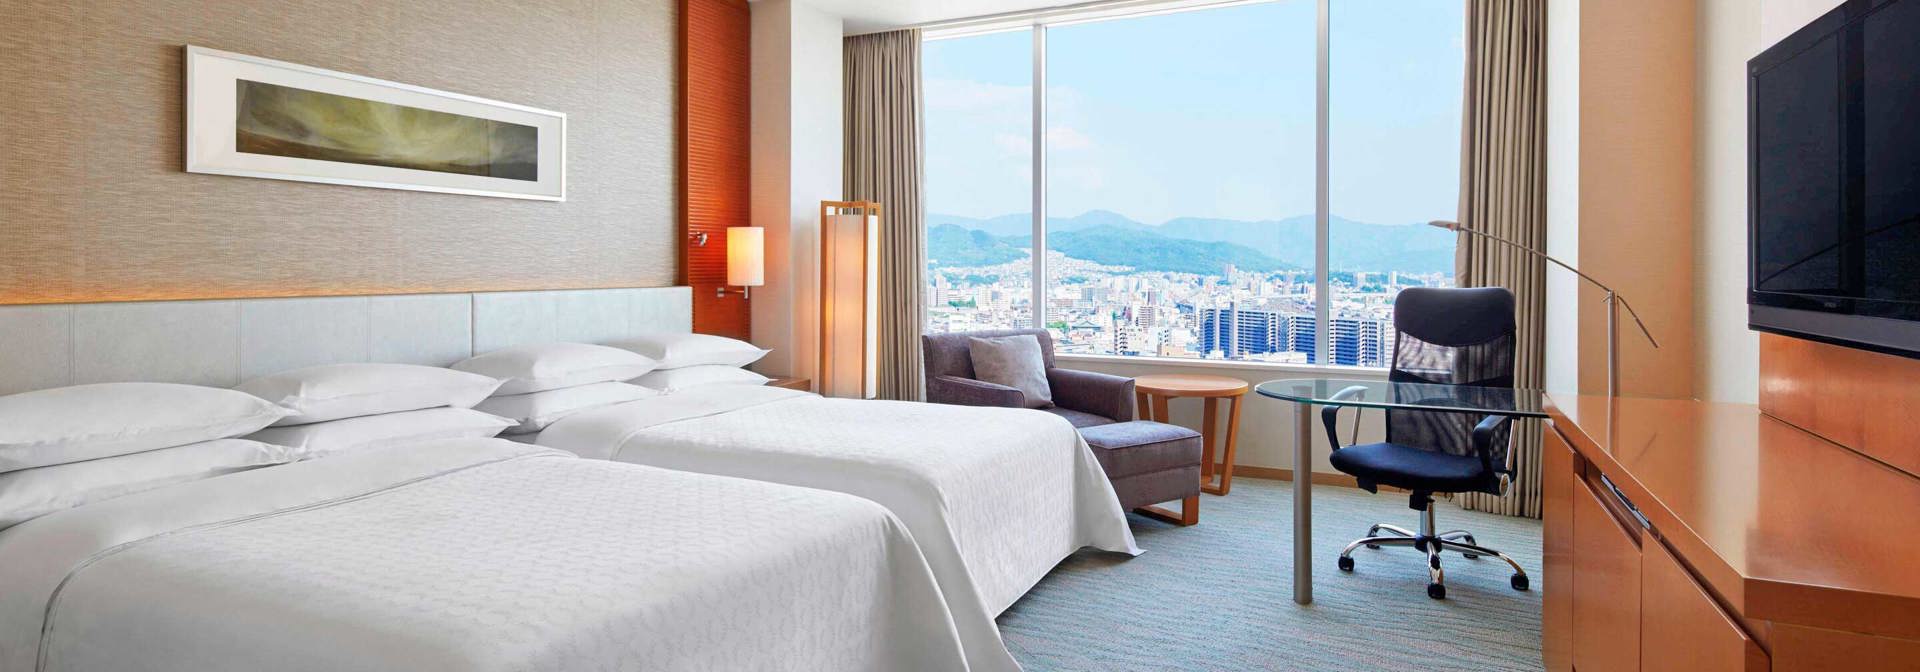 Sheraton Grand Hotel Hiroshima Room